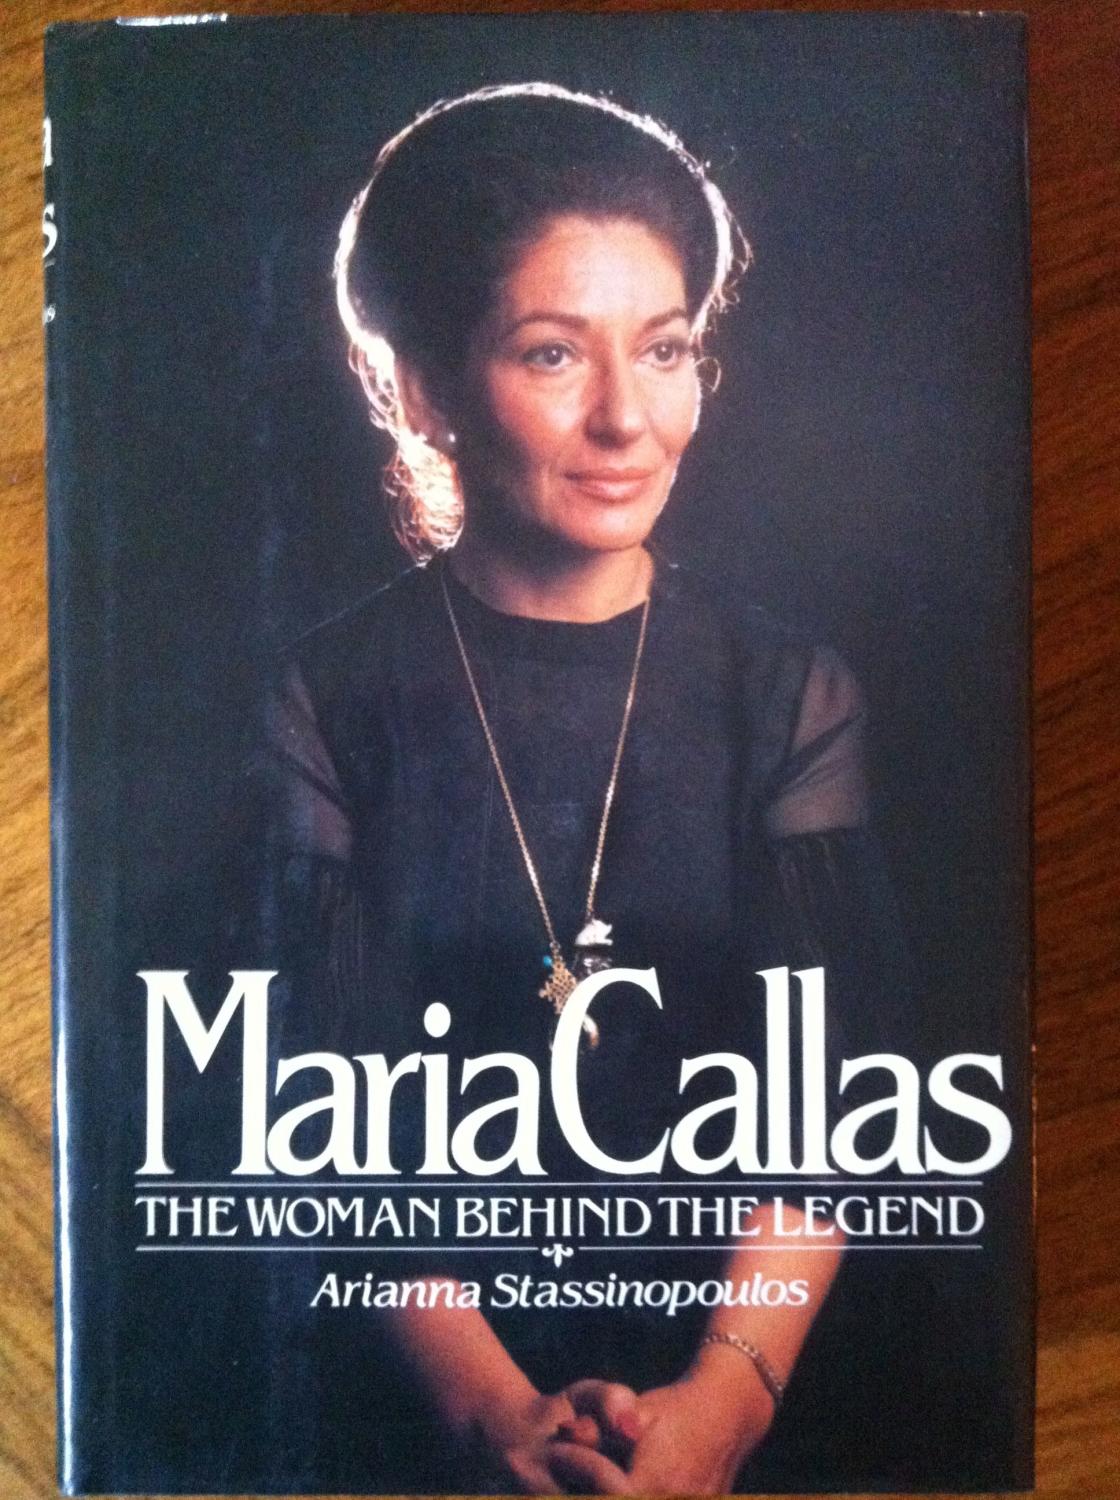 Maria Callas: The Women Behind the Legend